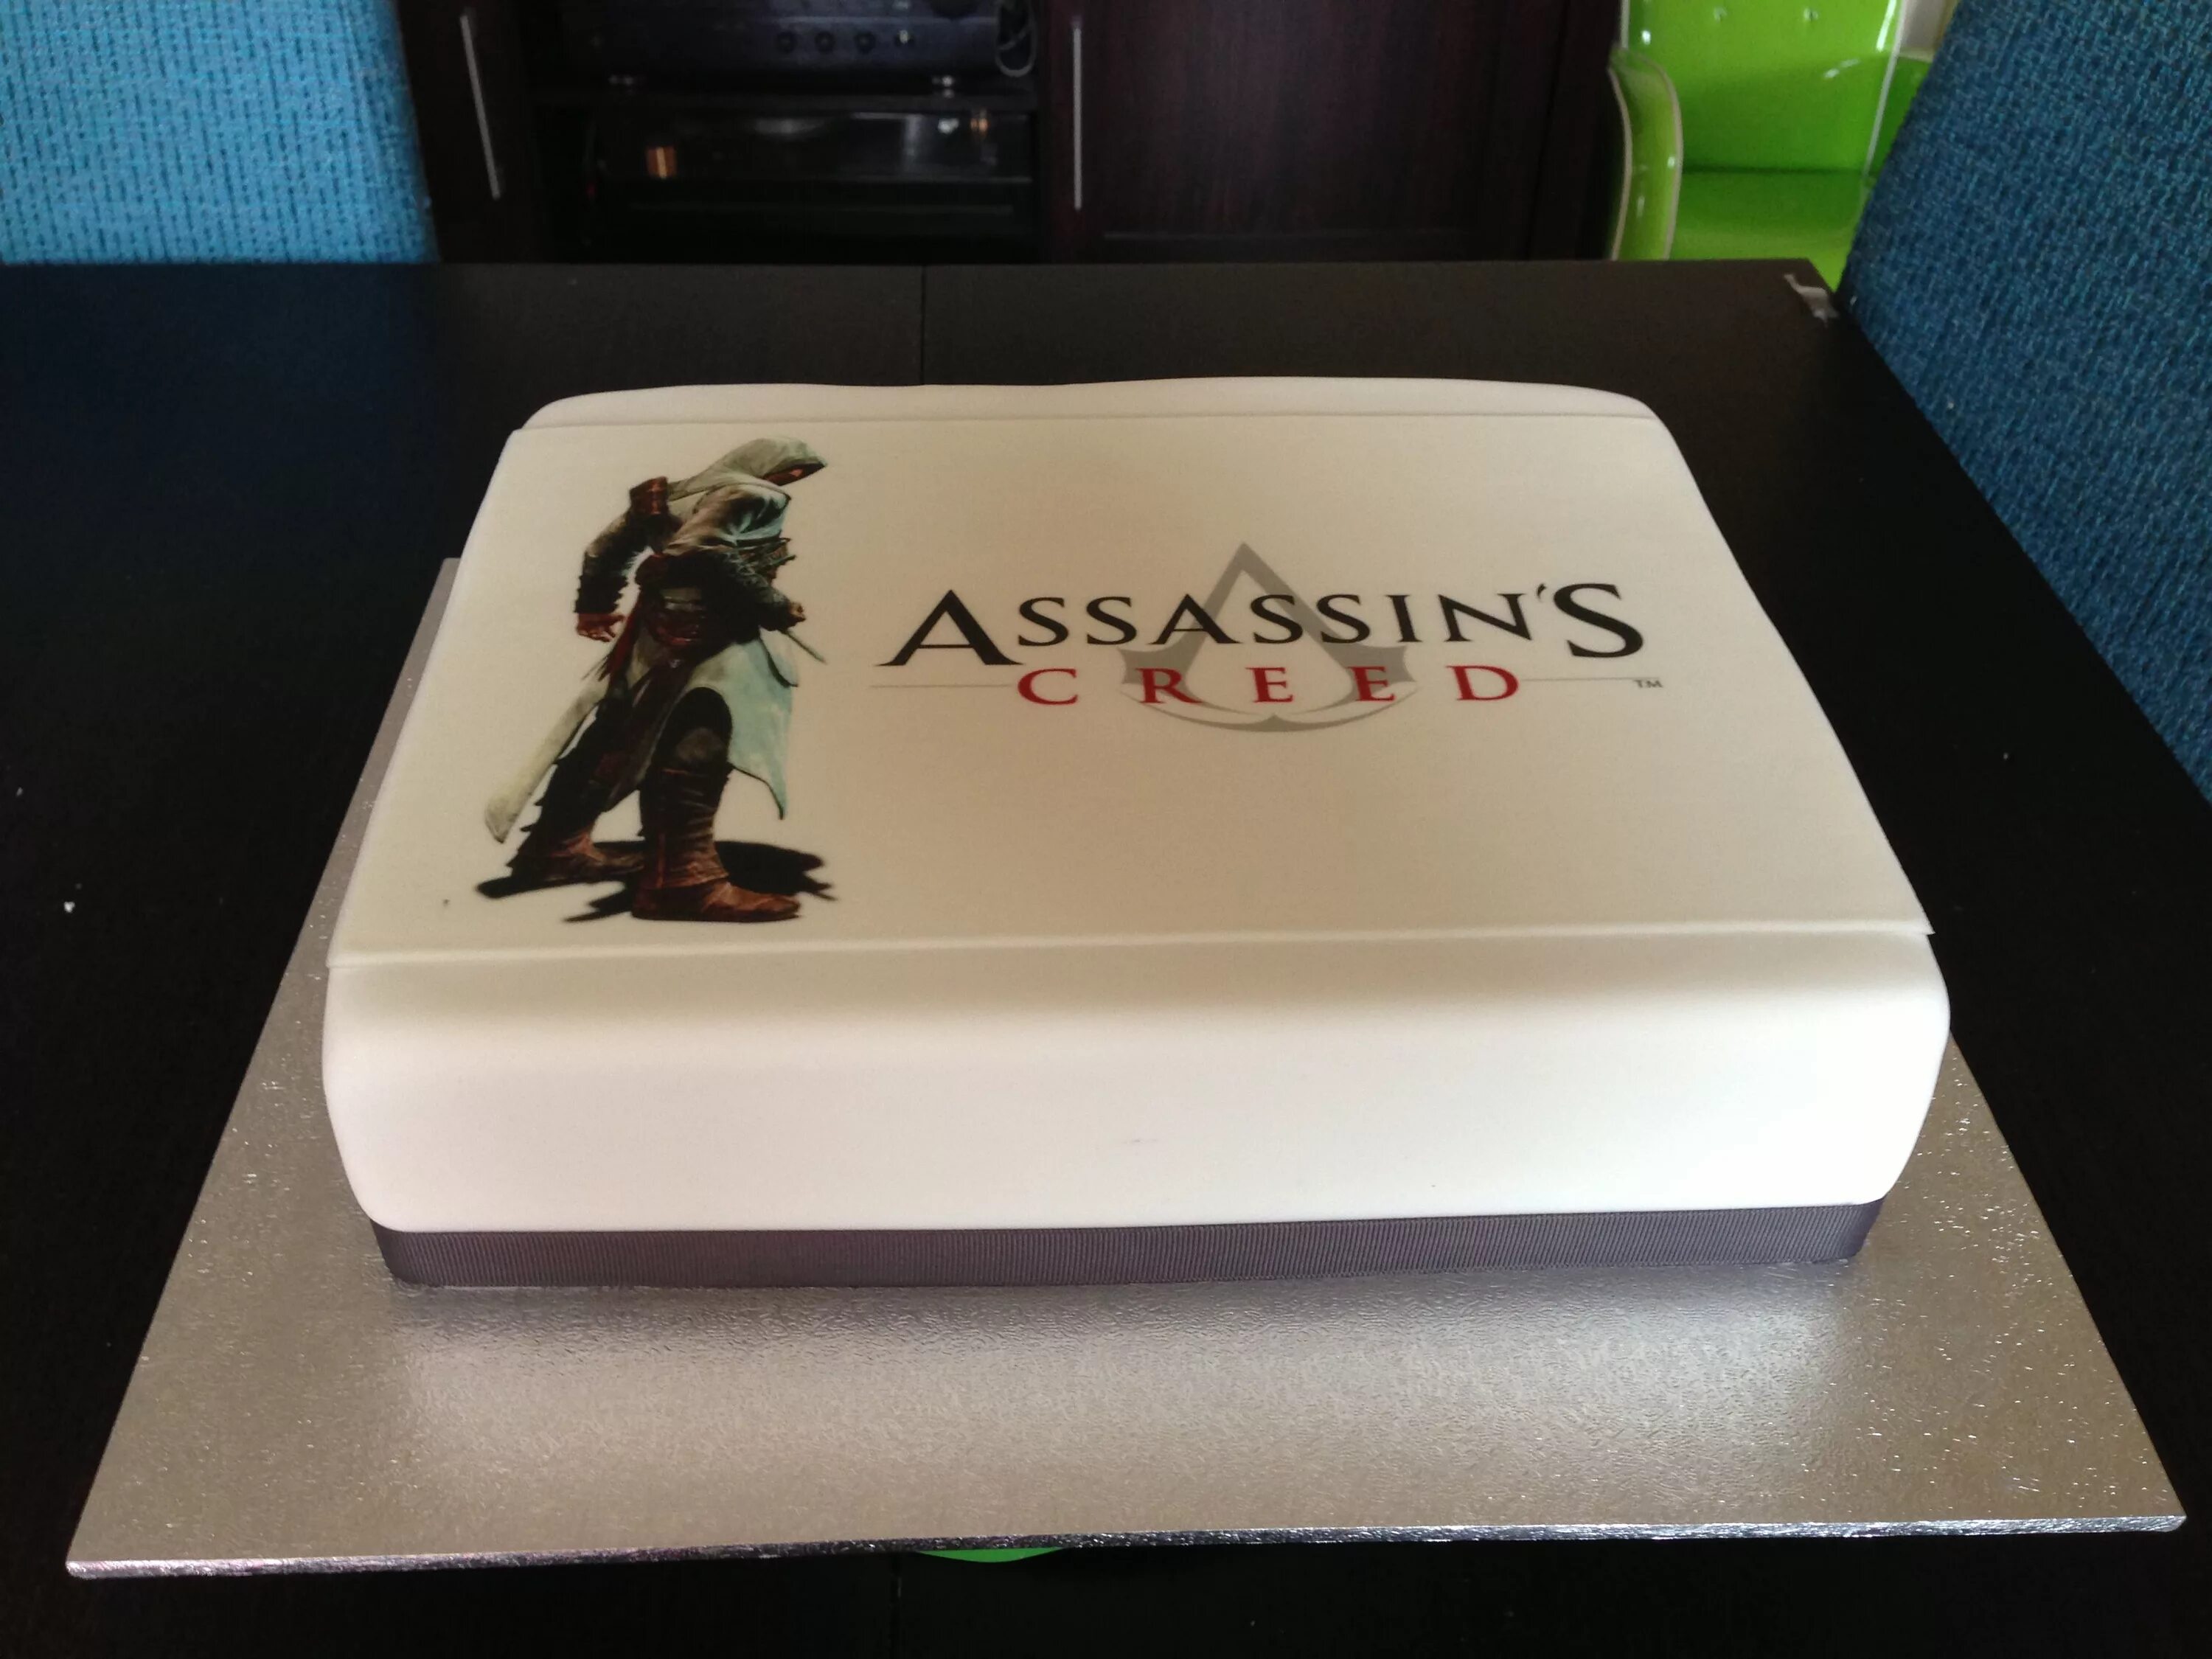 This is my cake. Торт Assassin's Creed. Торт ассасин. Торт ассасин Крид. Торт с ассасином.